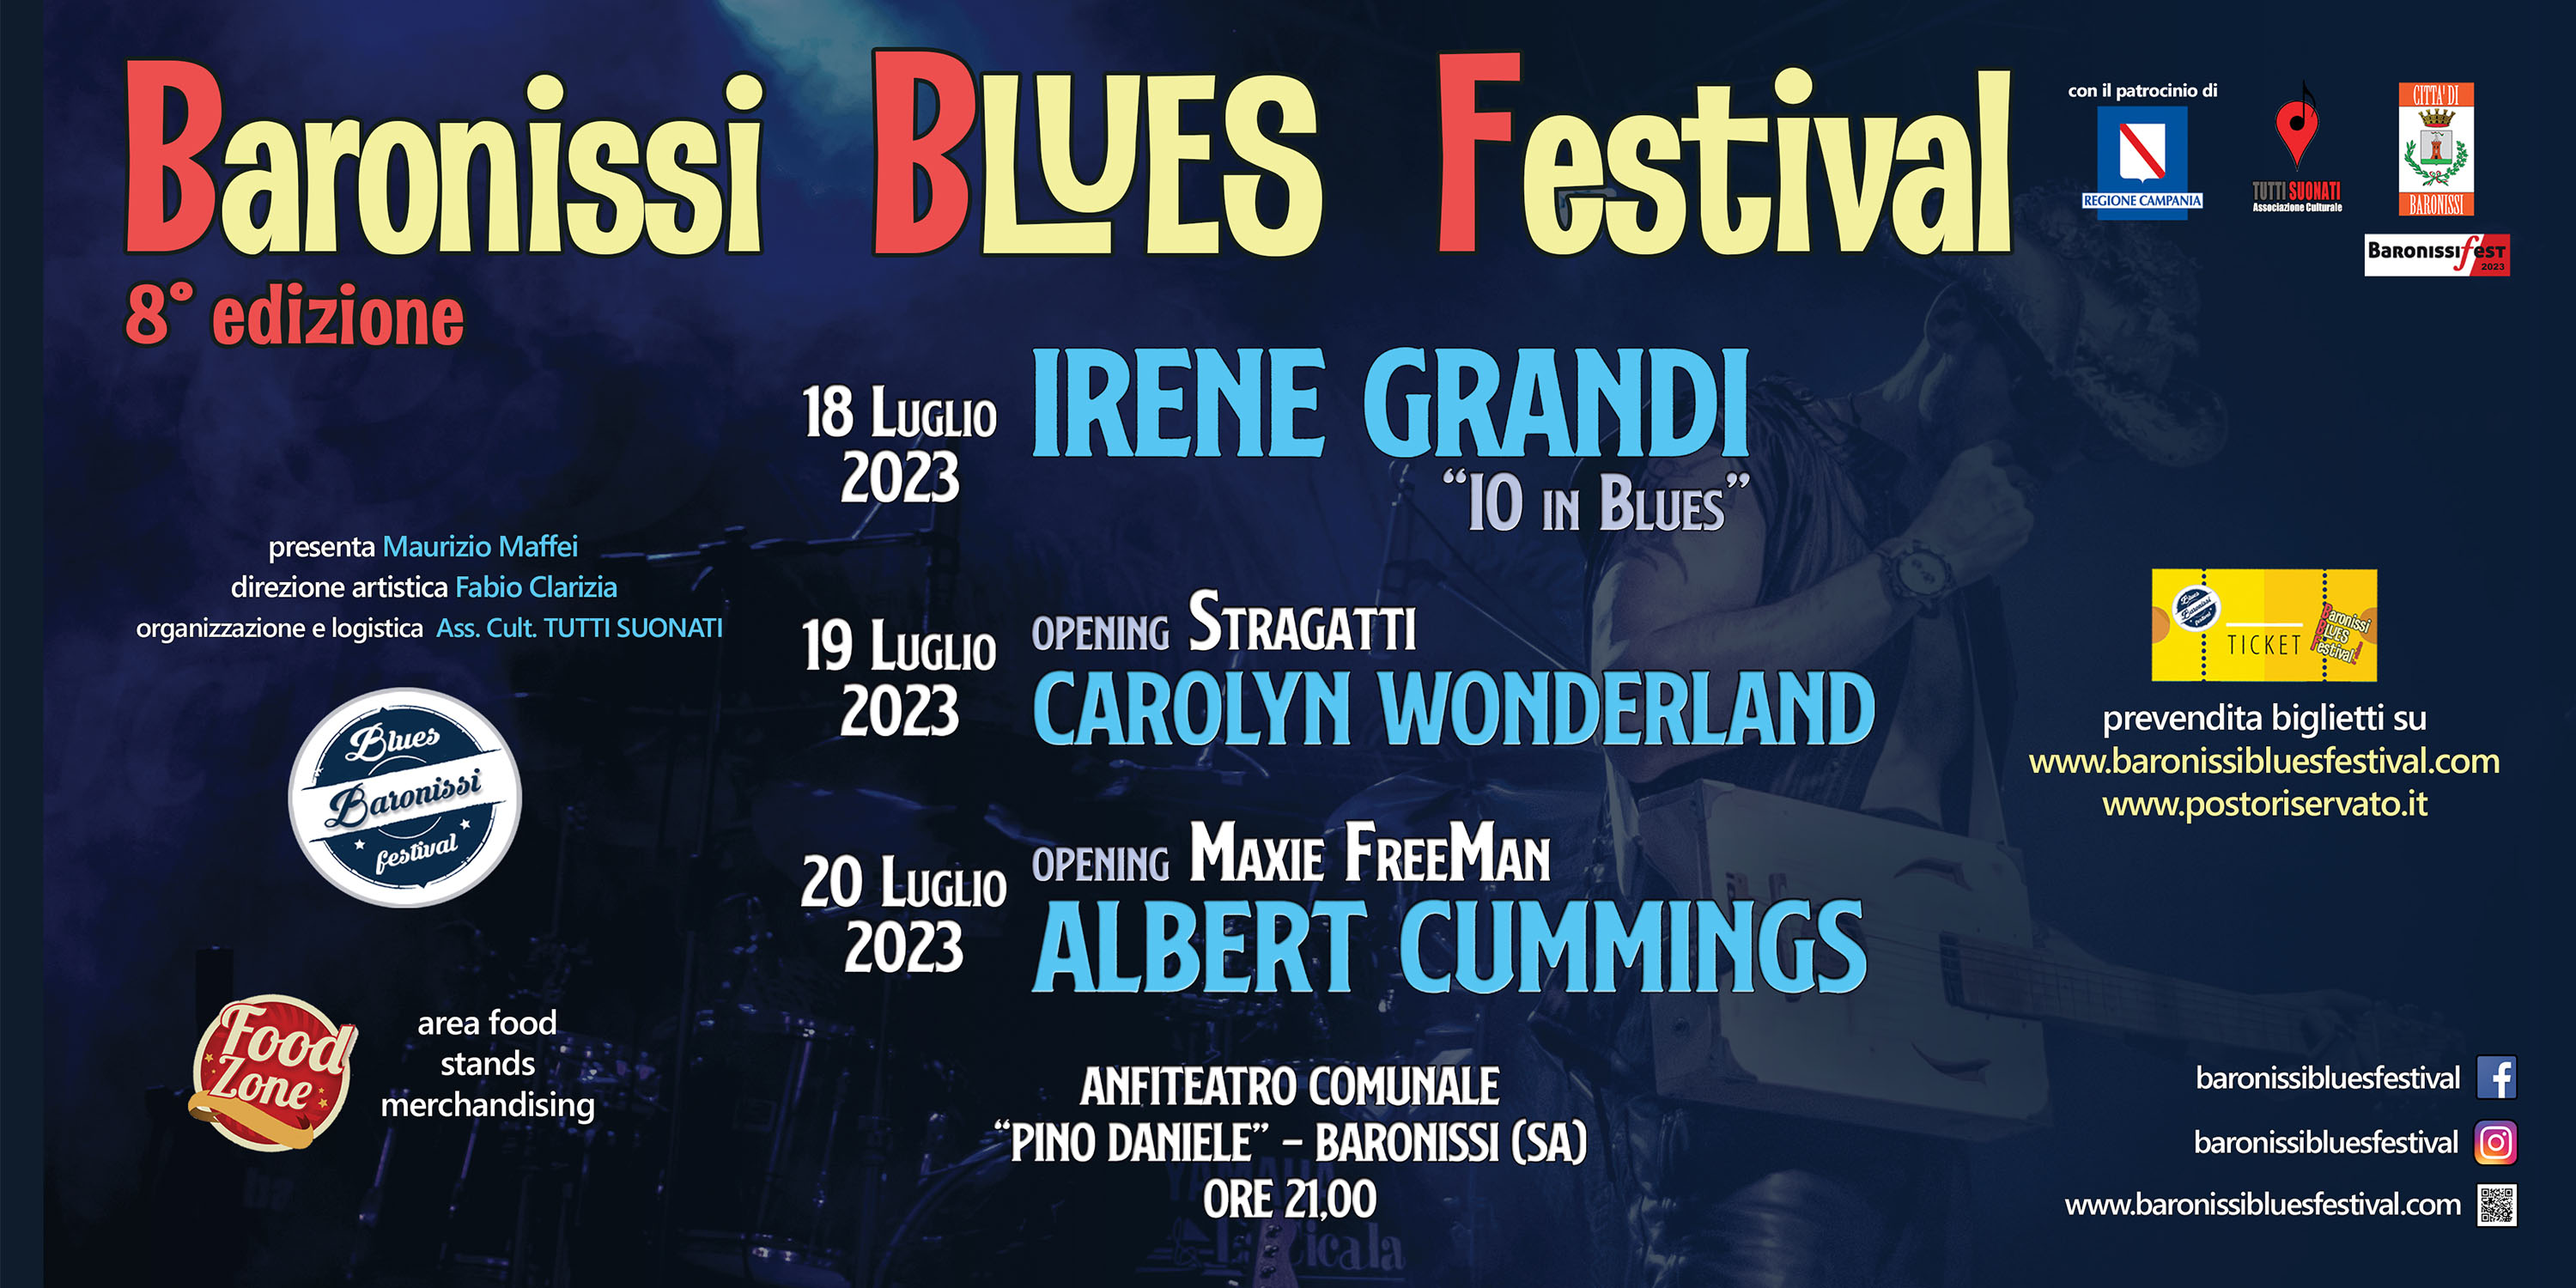 Baronissi Blues Festival 2023